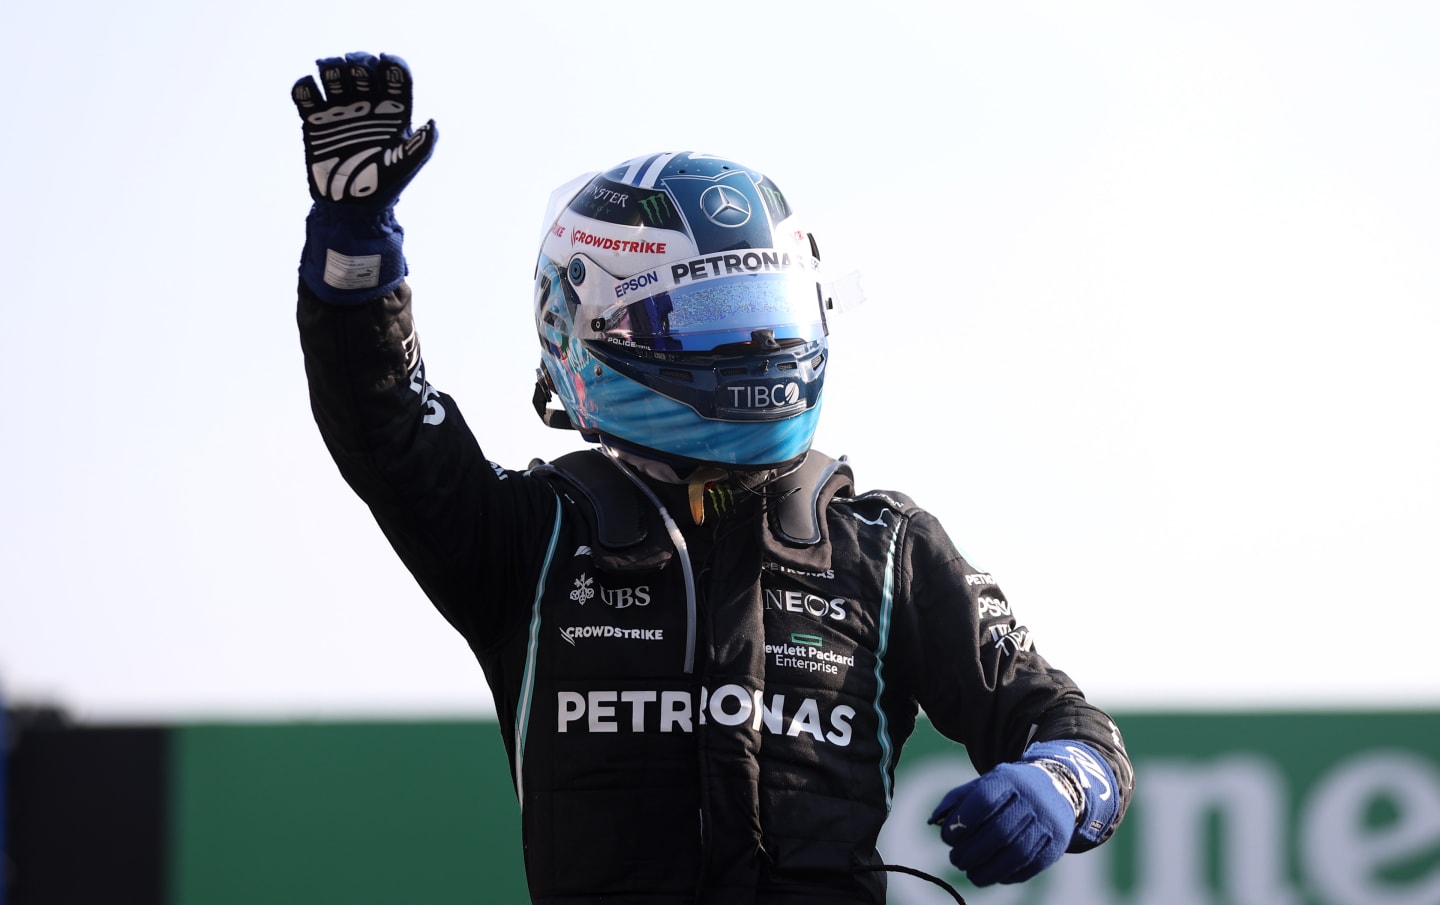 MONZA, ITALY - SEPTEMBER 11: Winner Valtteri Bottas of Finland and Mercedes GP celebrates in parc